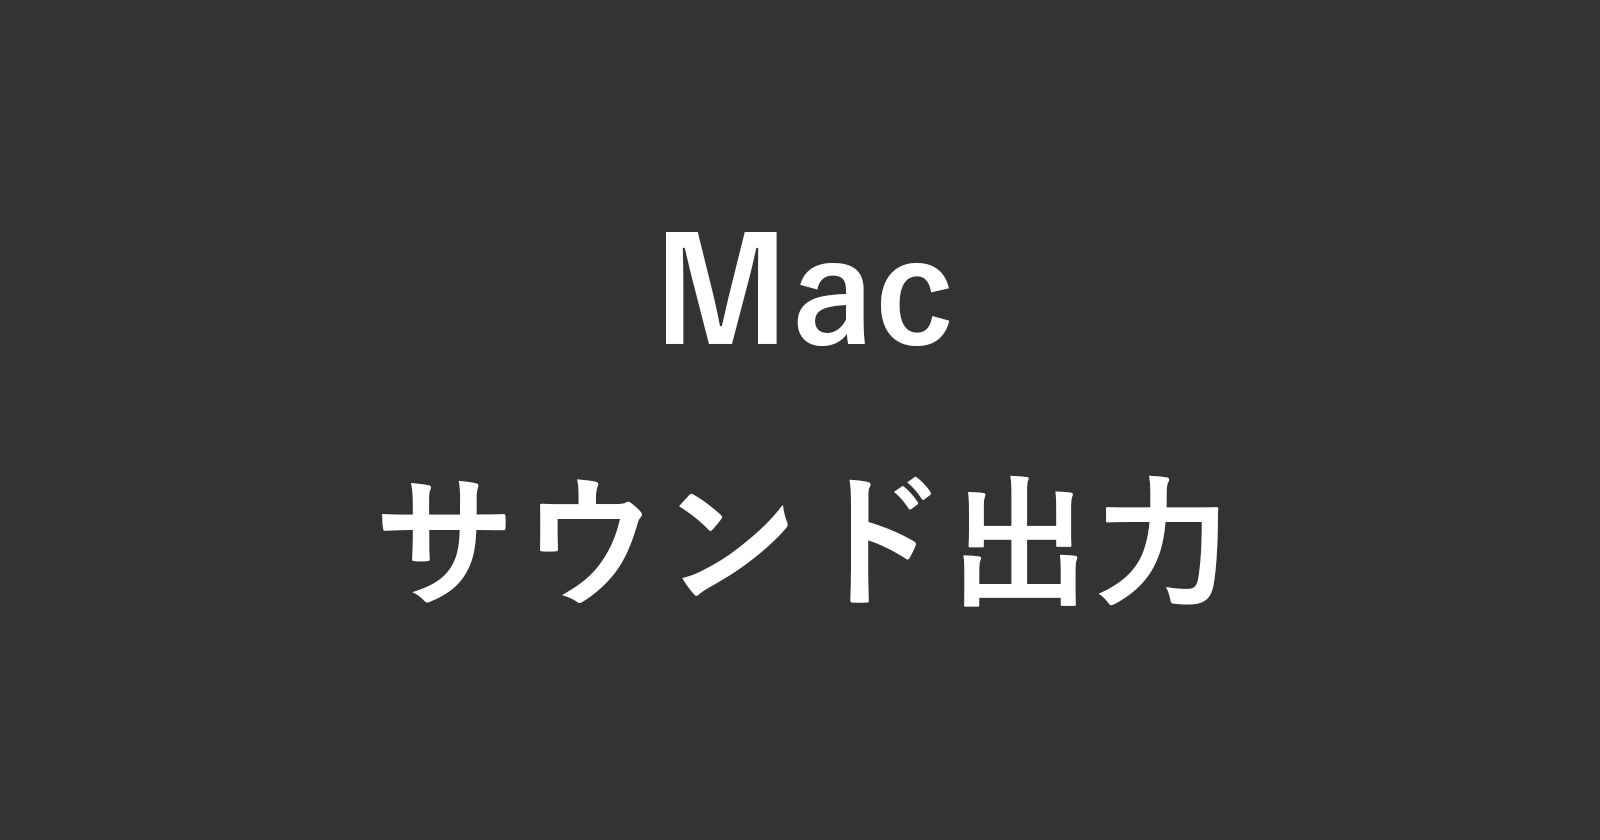 mac sound output